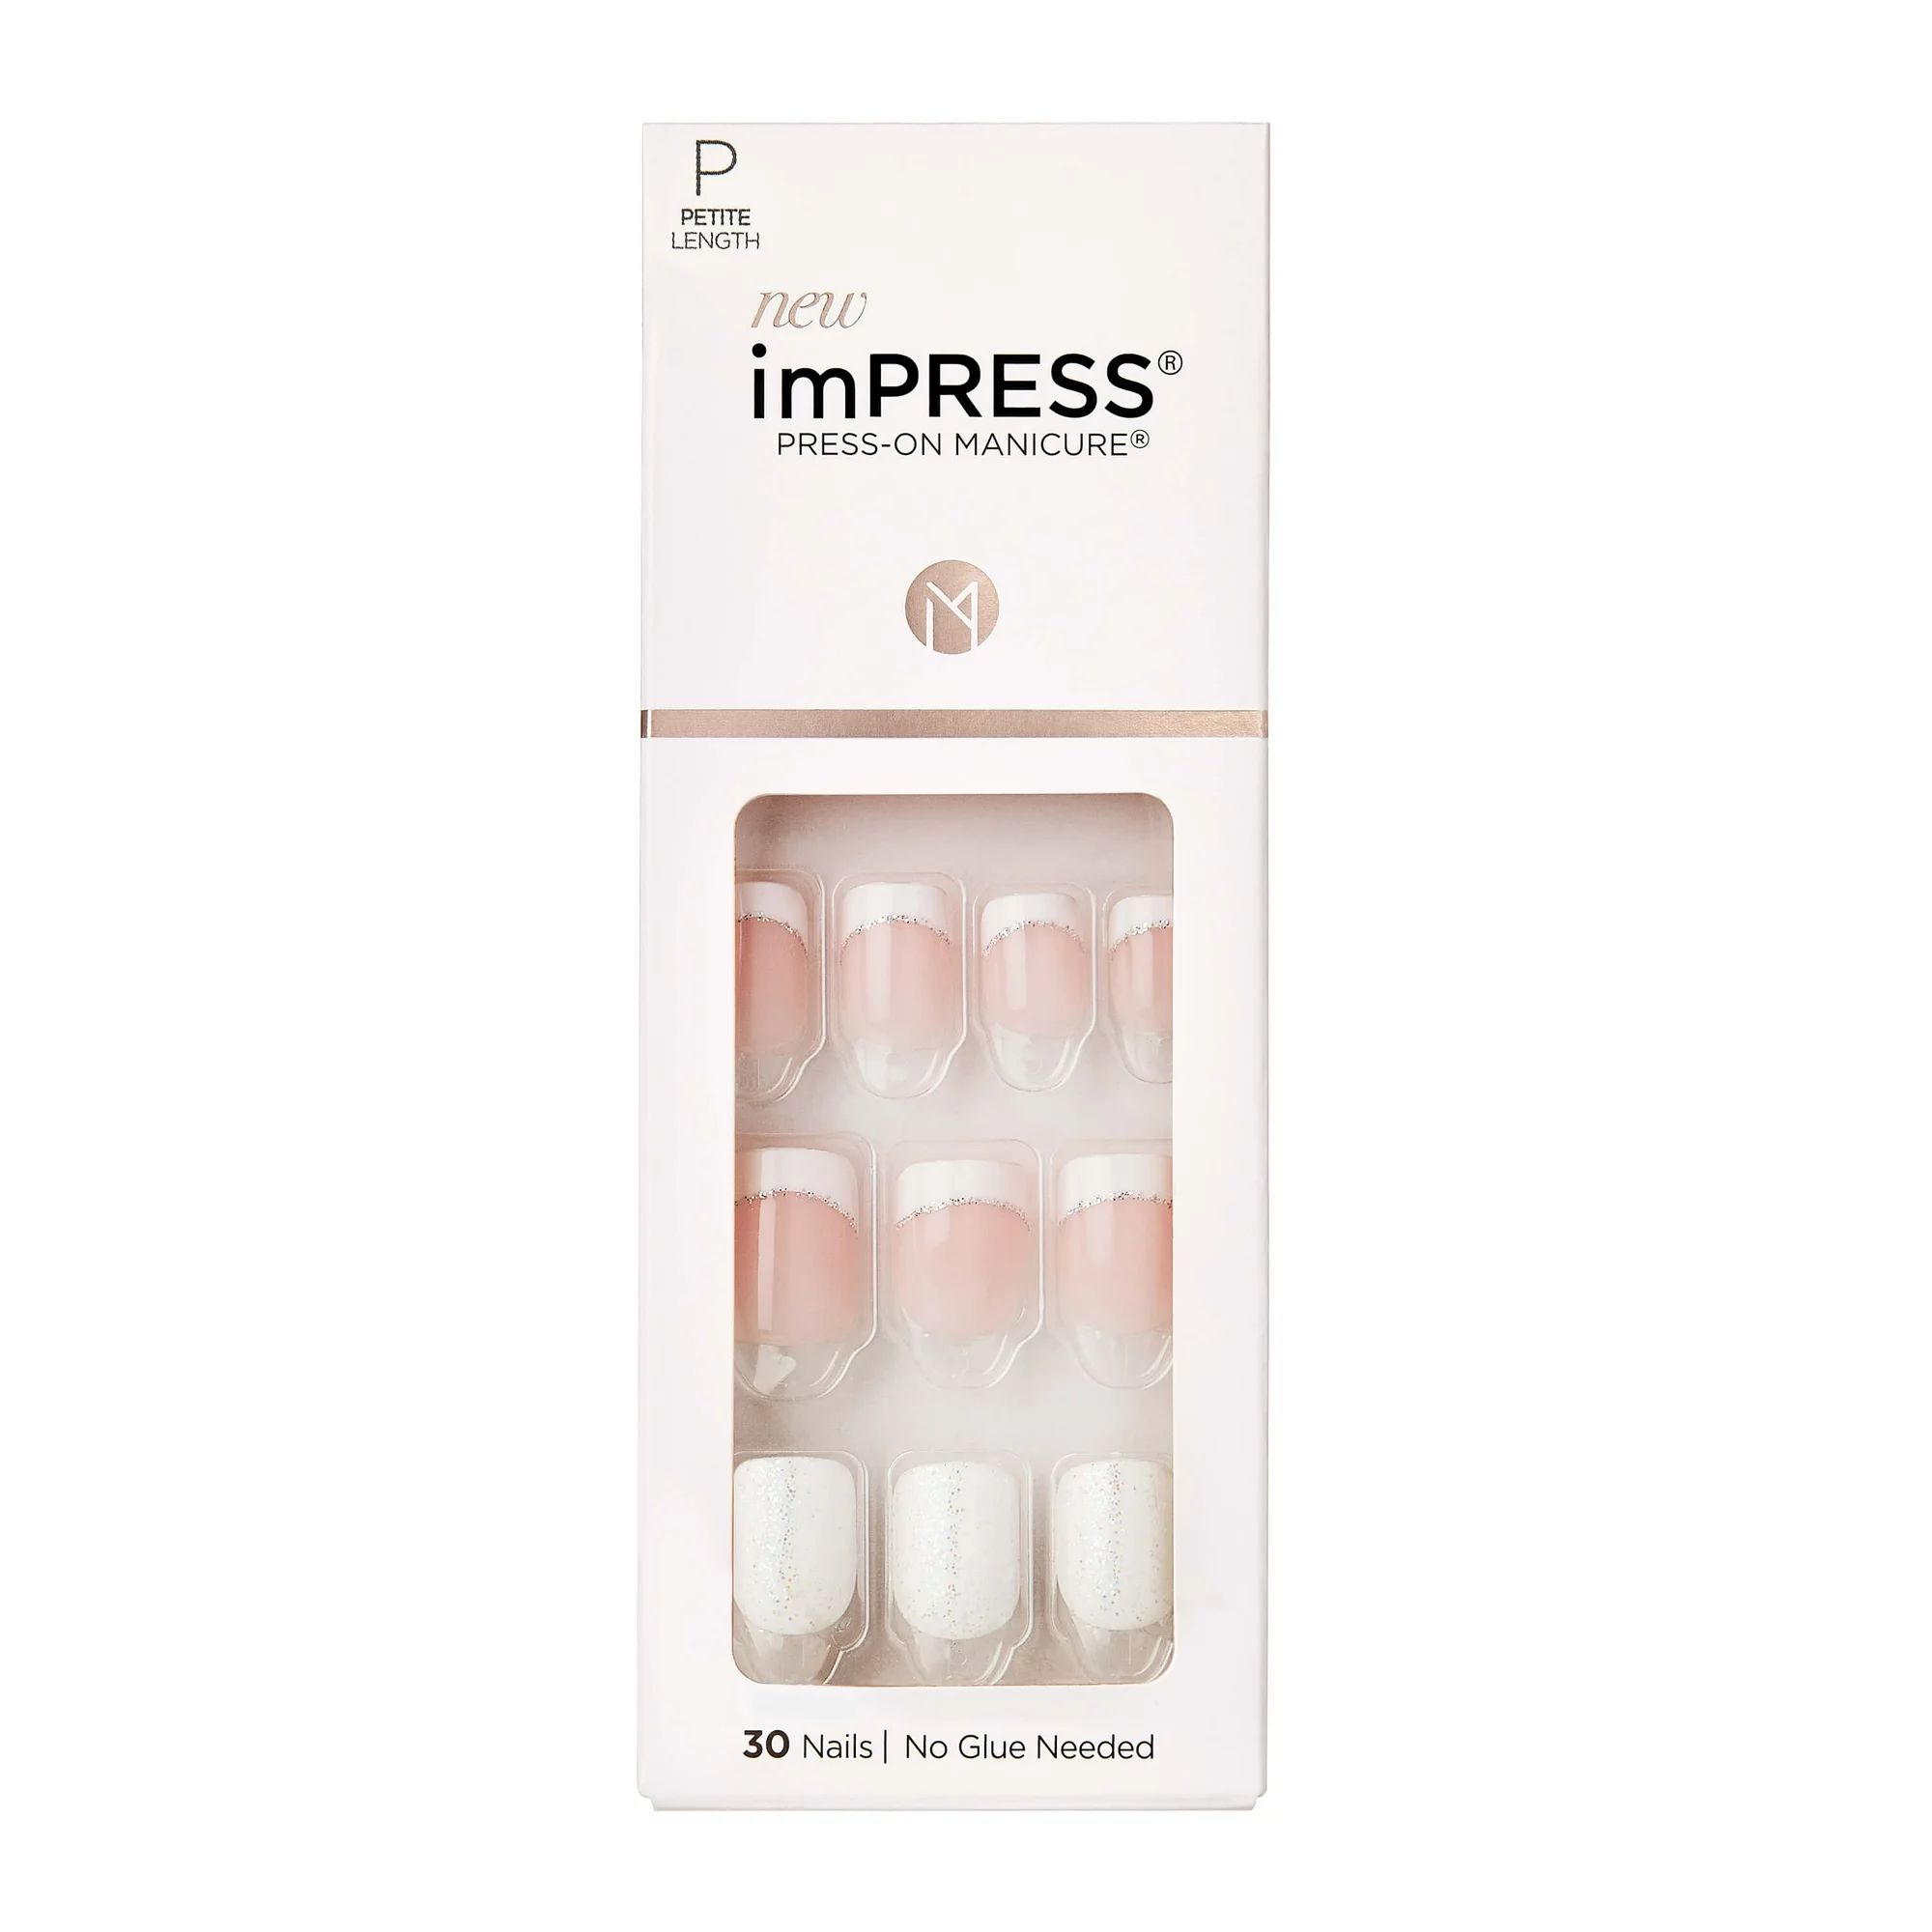 imPRESS Press-on Manicure - Petite, Mini Me, Short | Walmart (US)